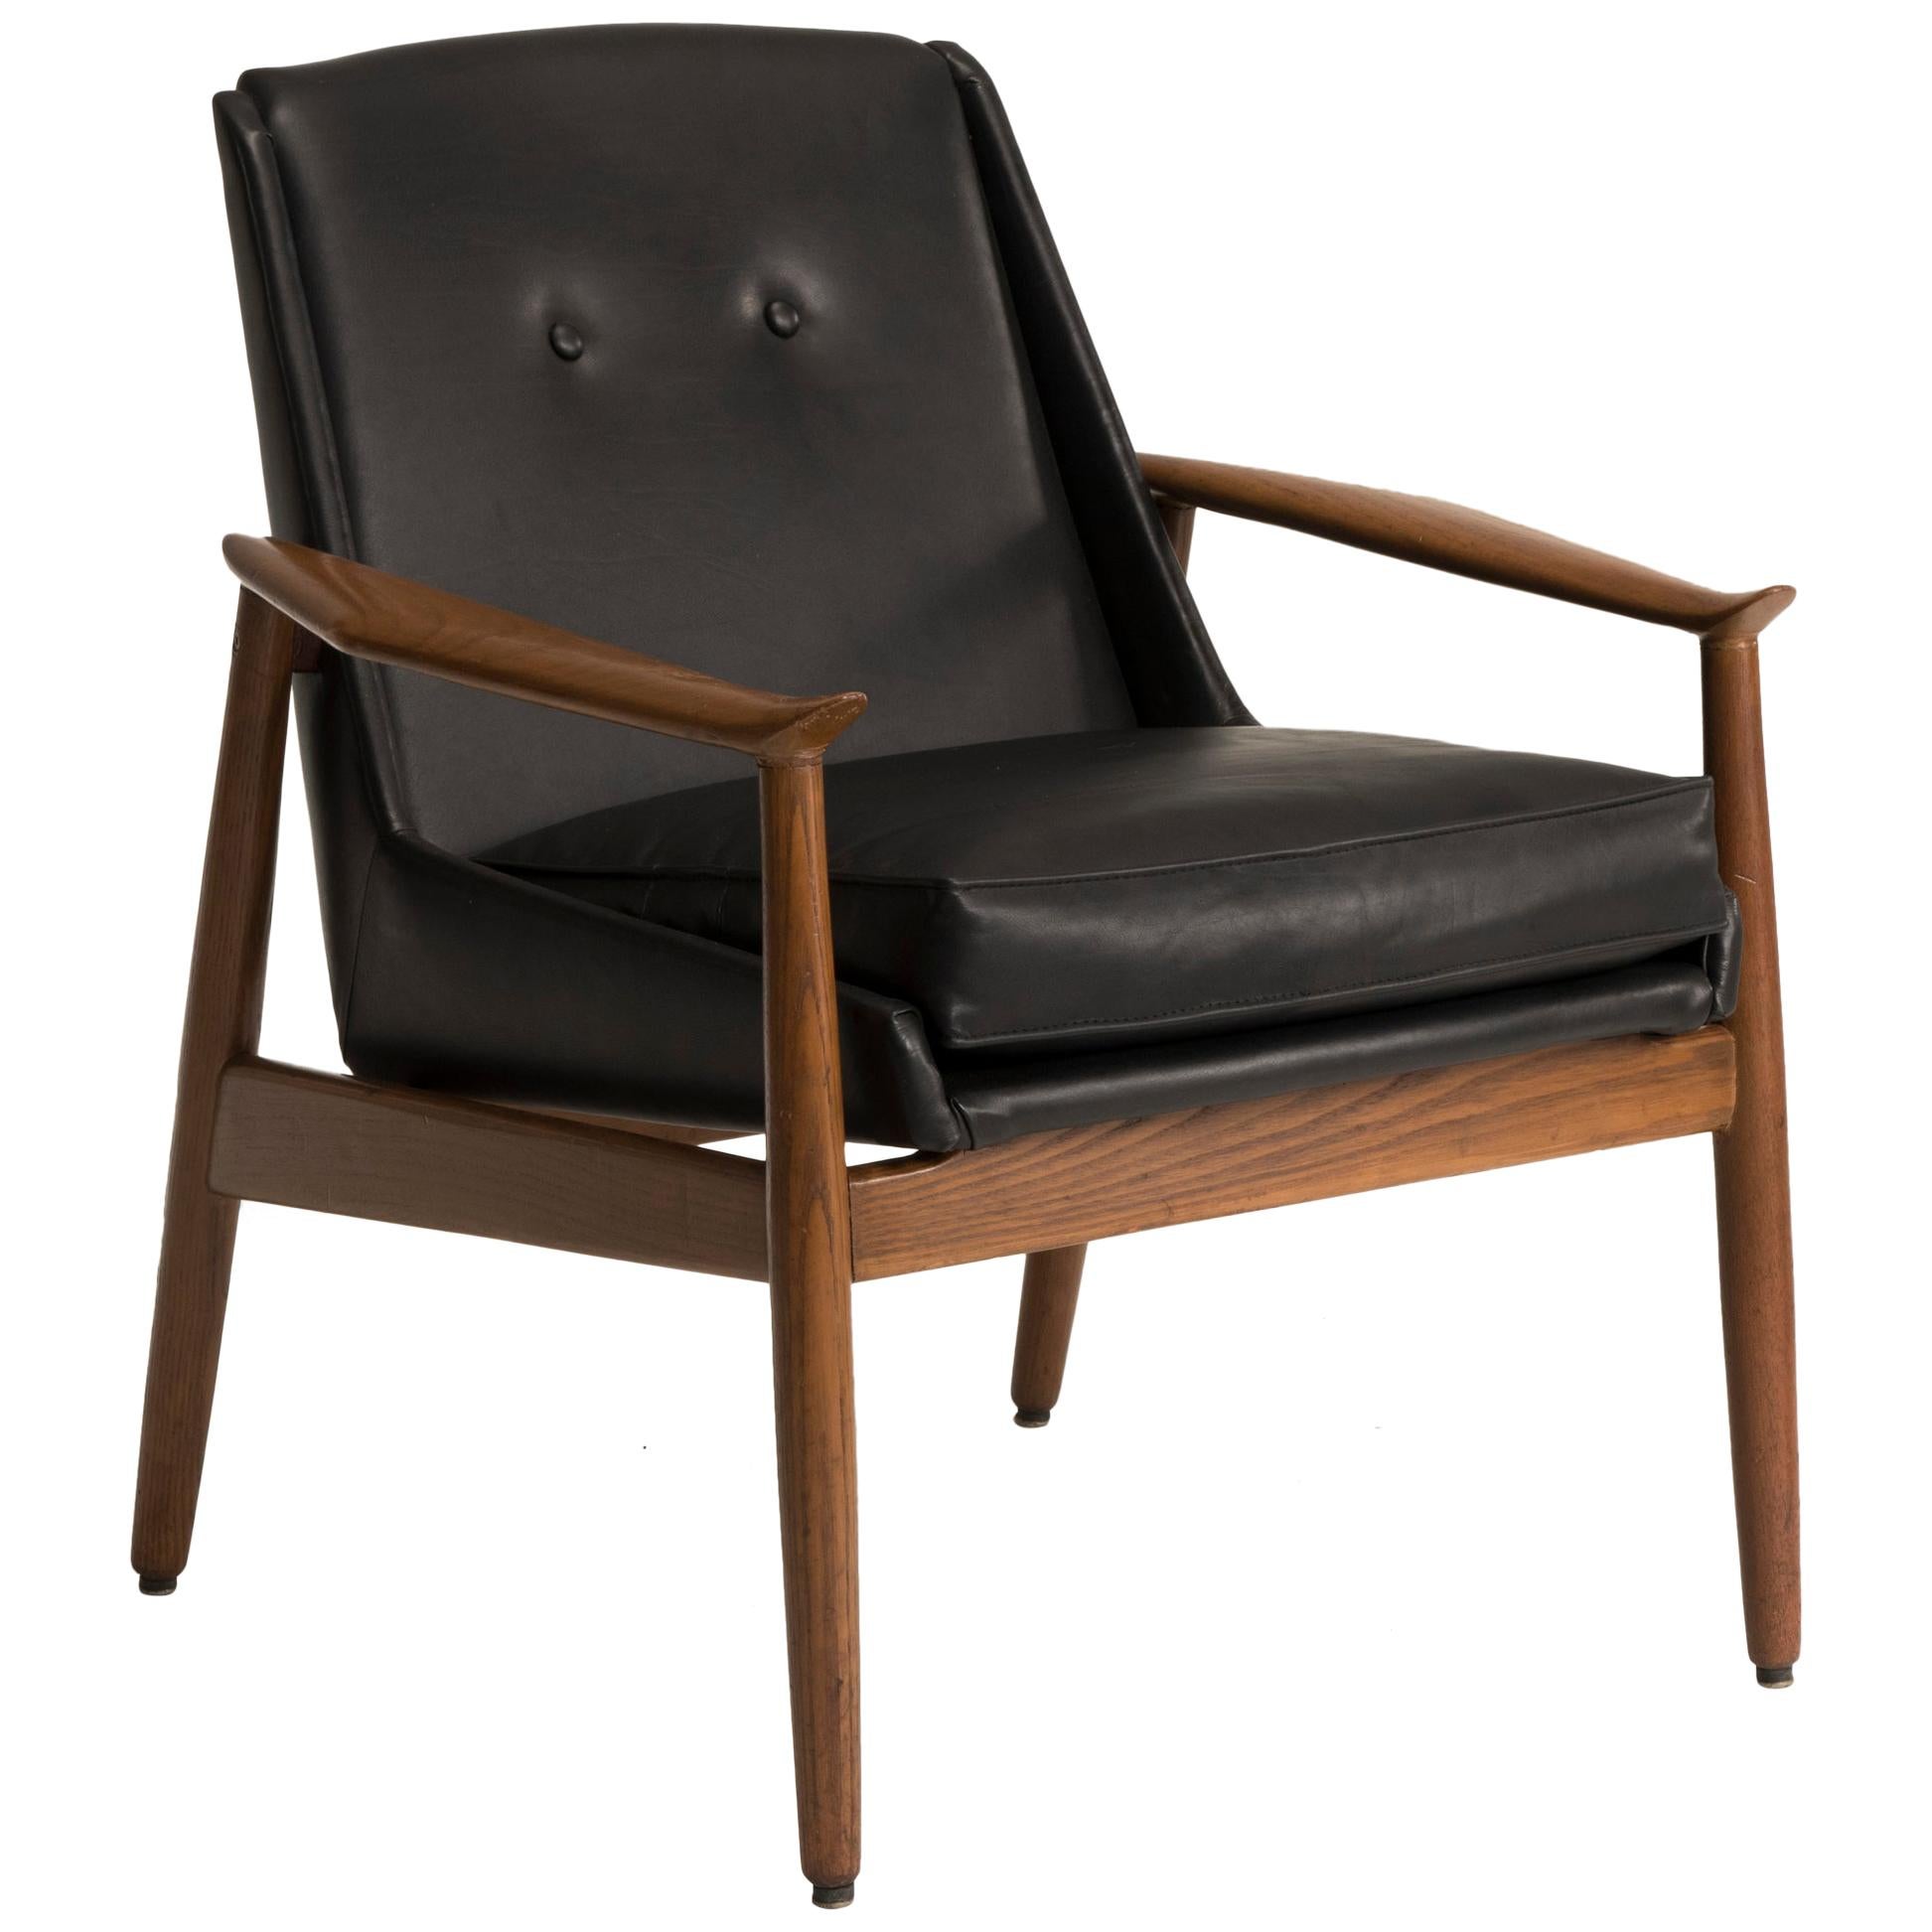 Italian Black Leather Walnut Wood Armchair, by Pizzetti 1950s